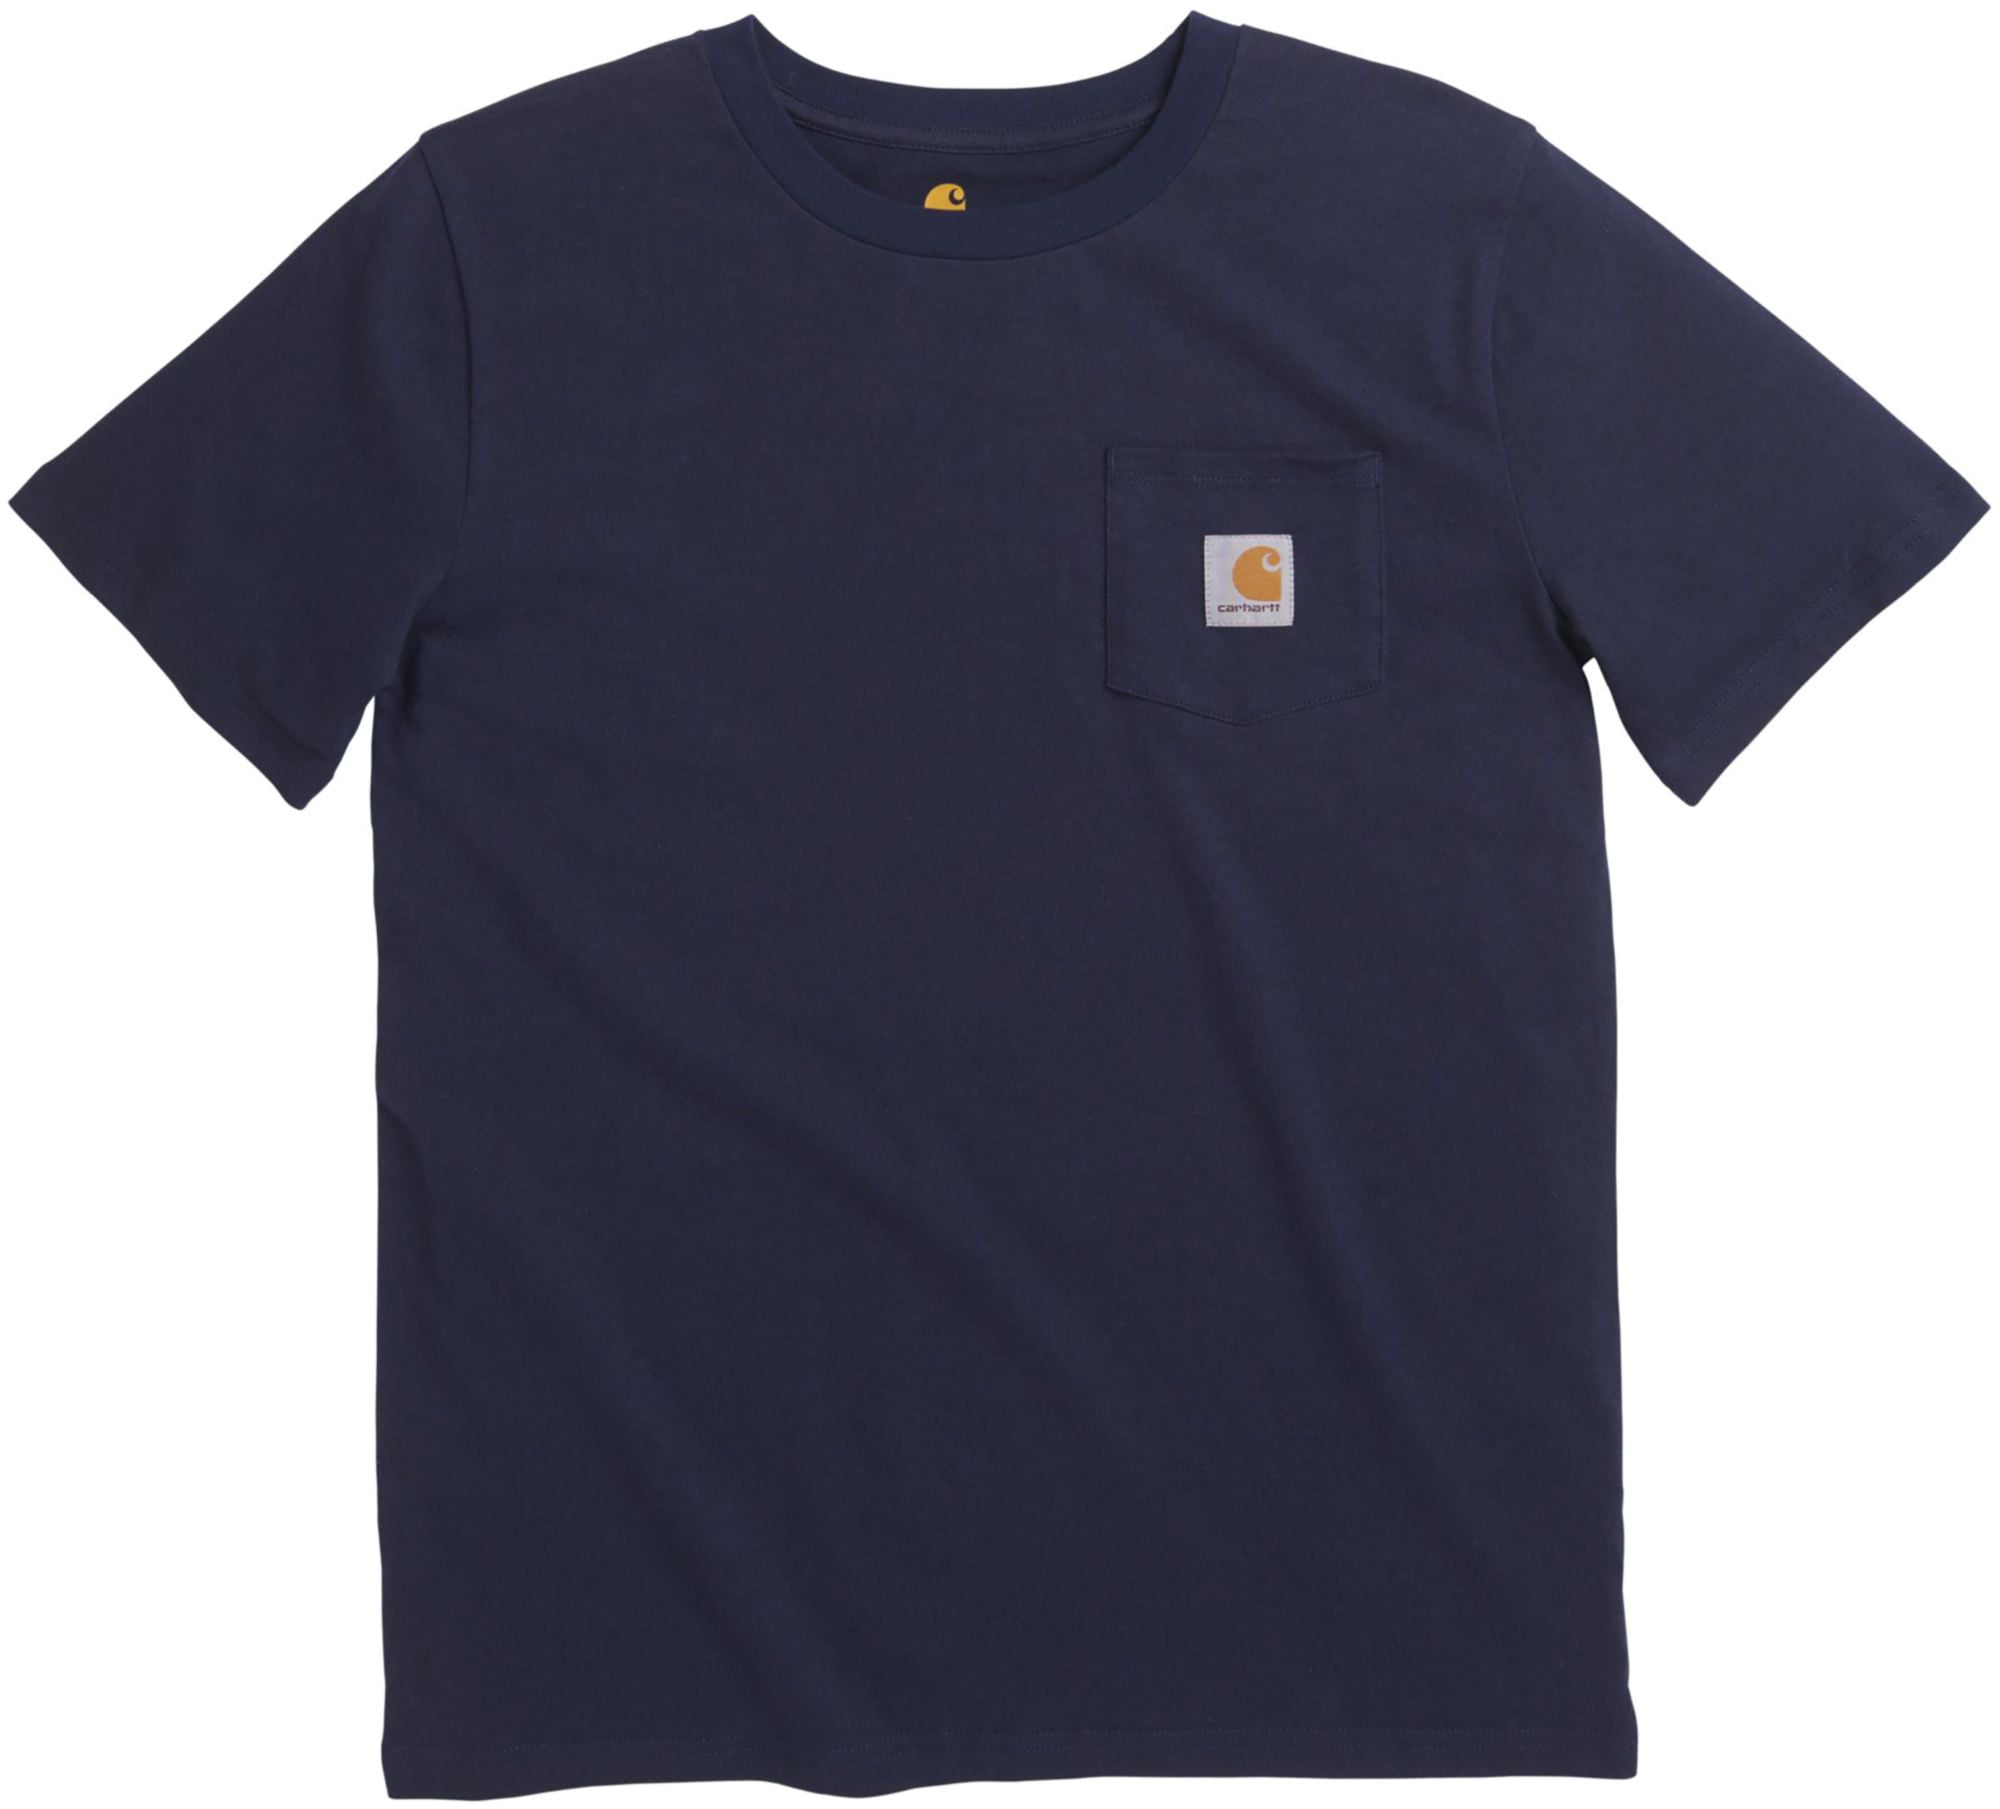 Carhartt Boys' Pocket T-Shirt - Walmart.com - Walmart.com